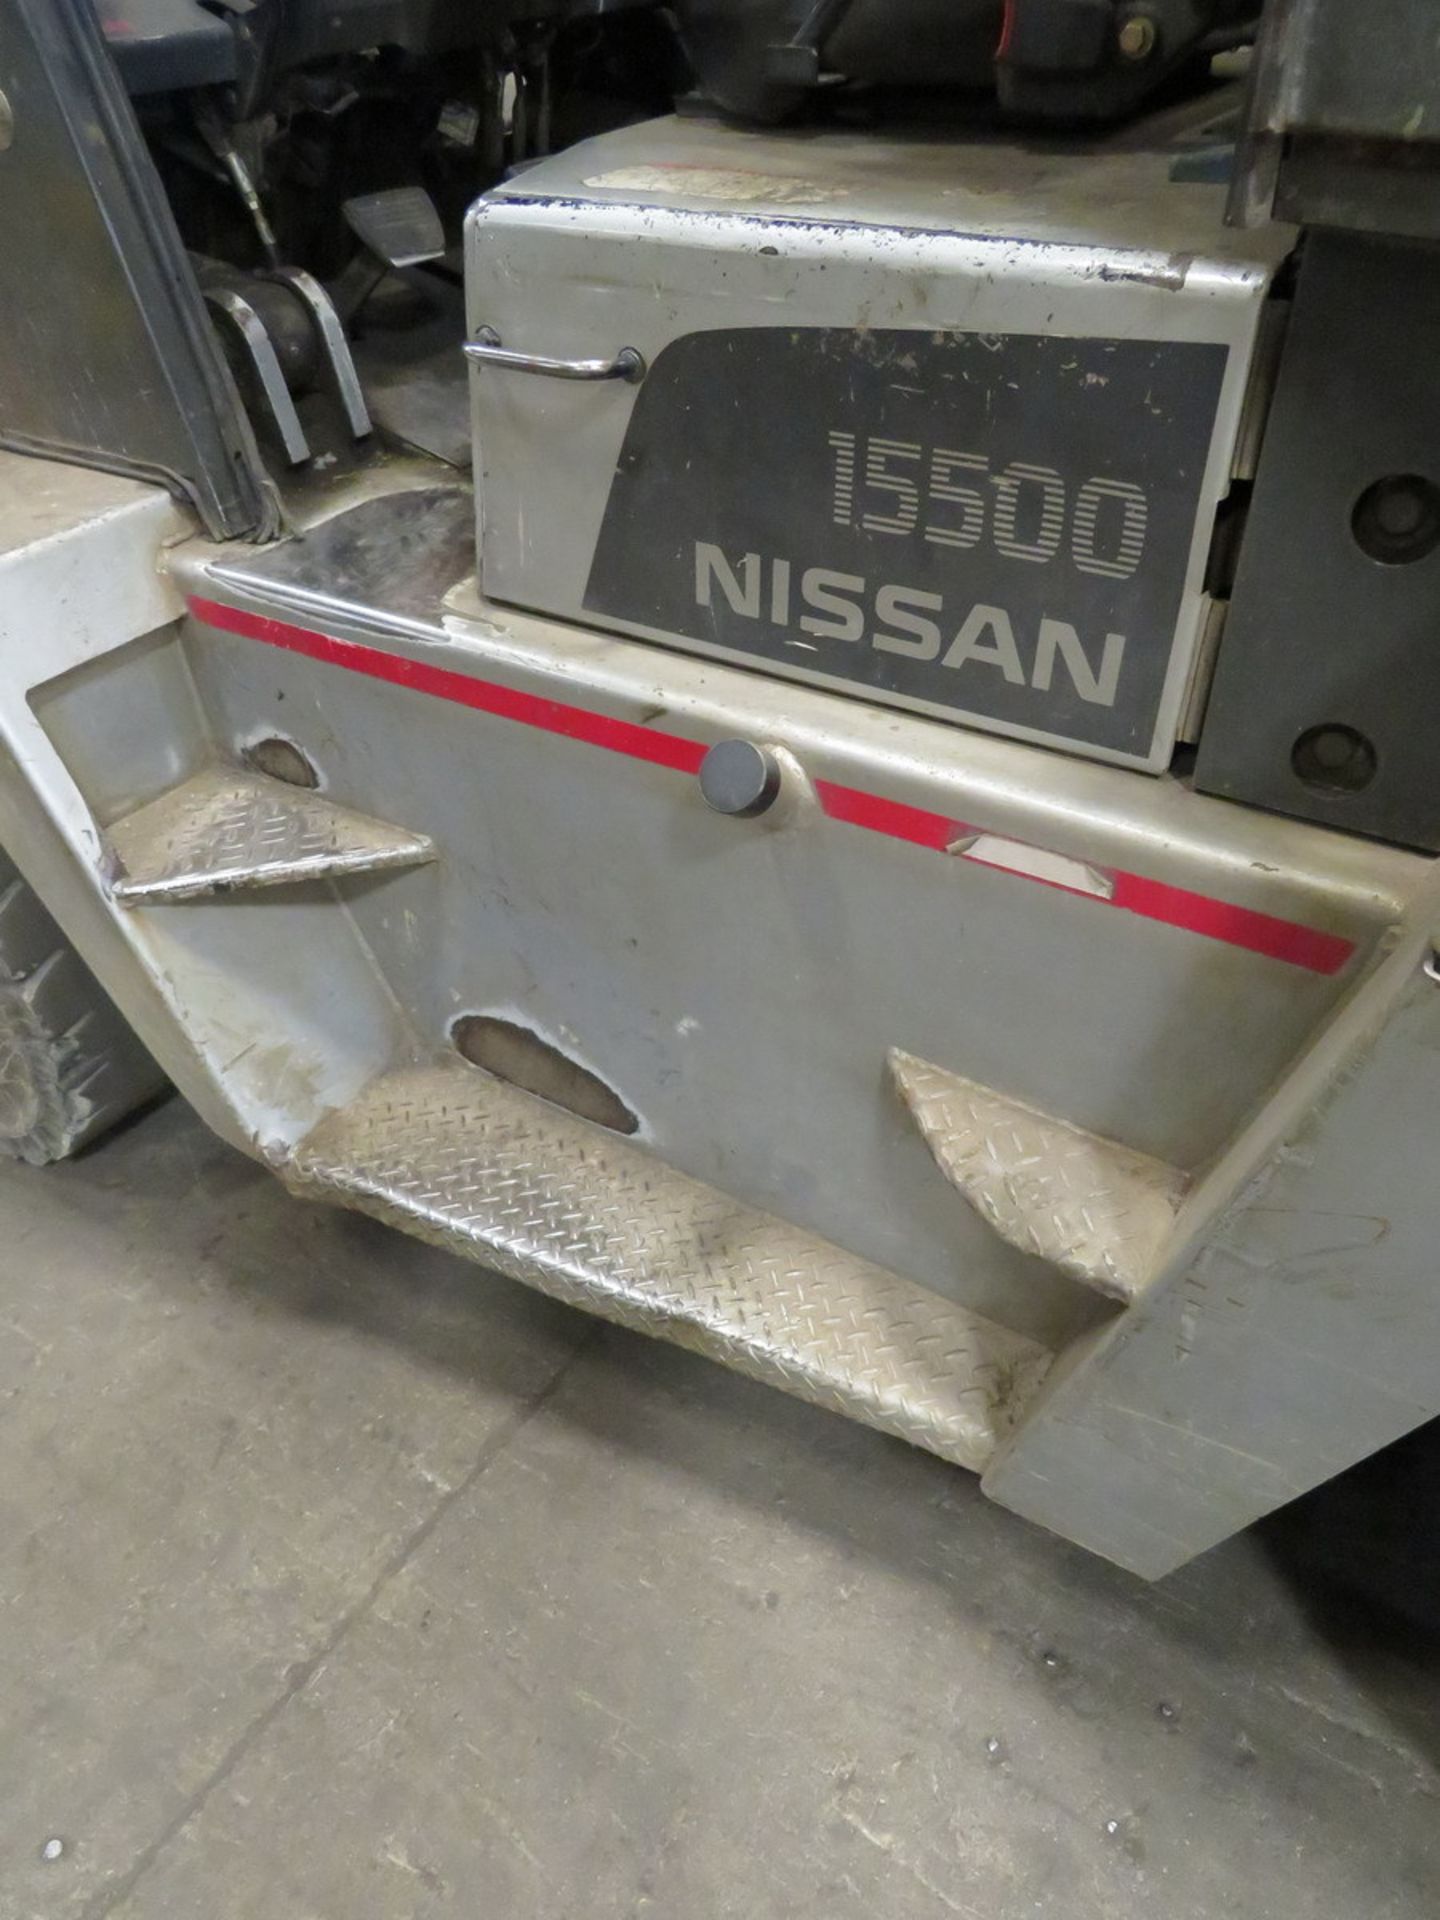 Nissan JF05H70PV Propane Forklift - Image 16 of 30